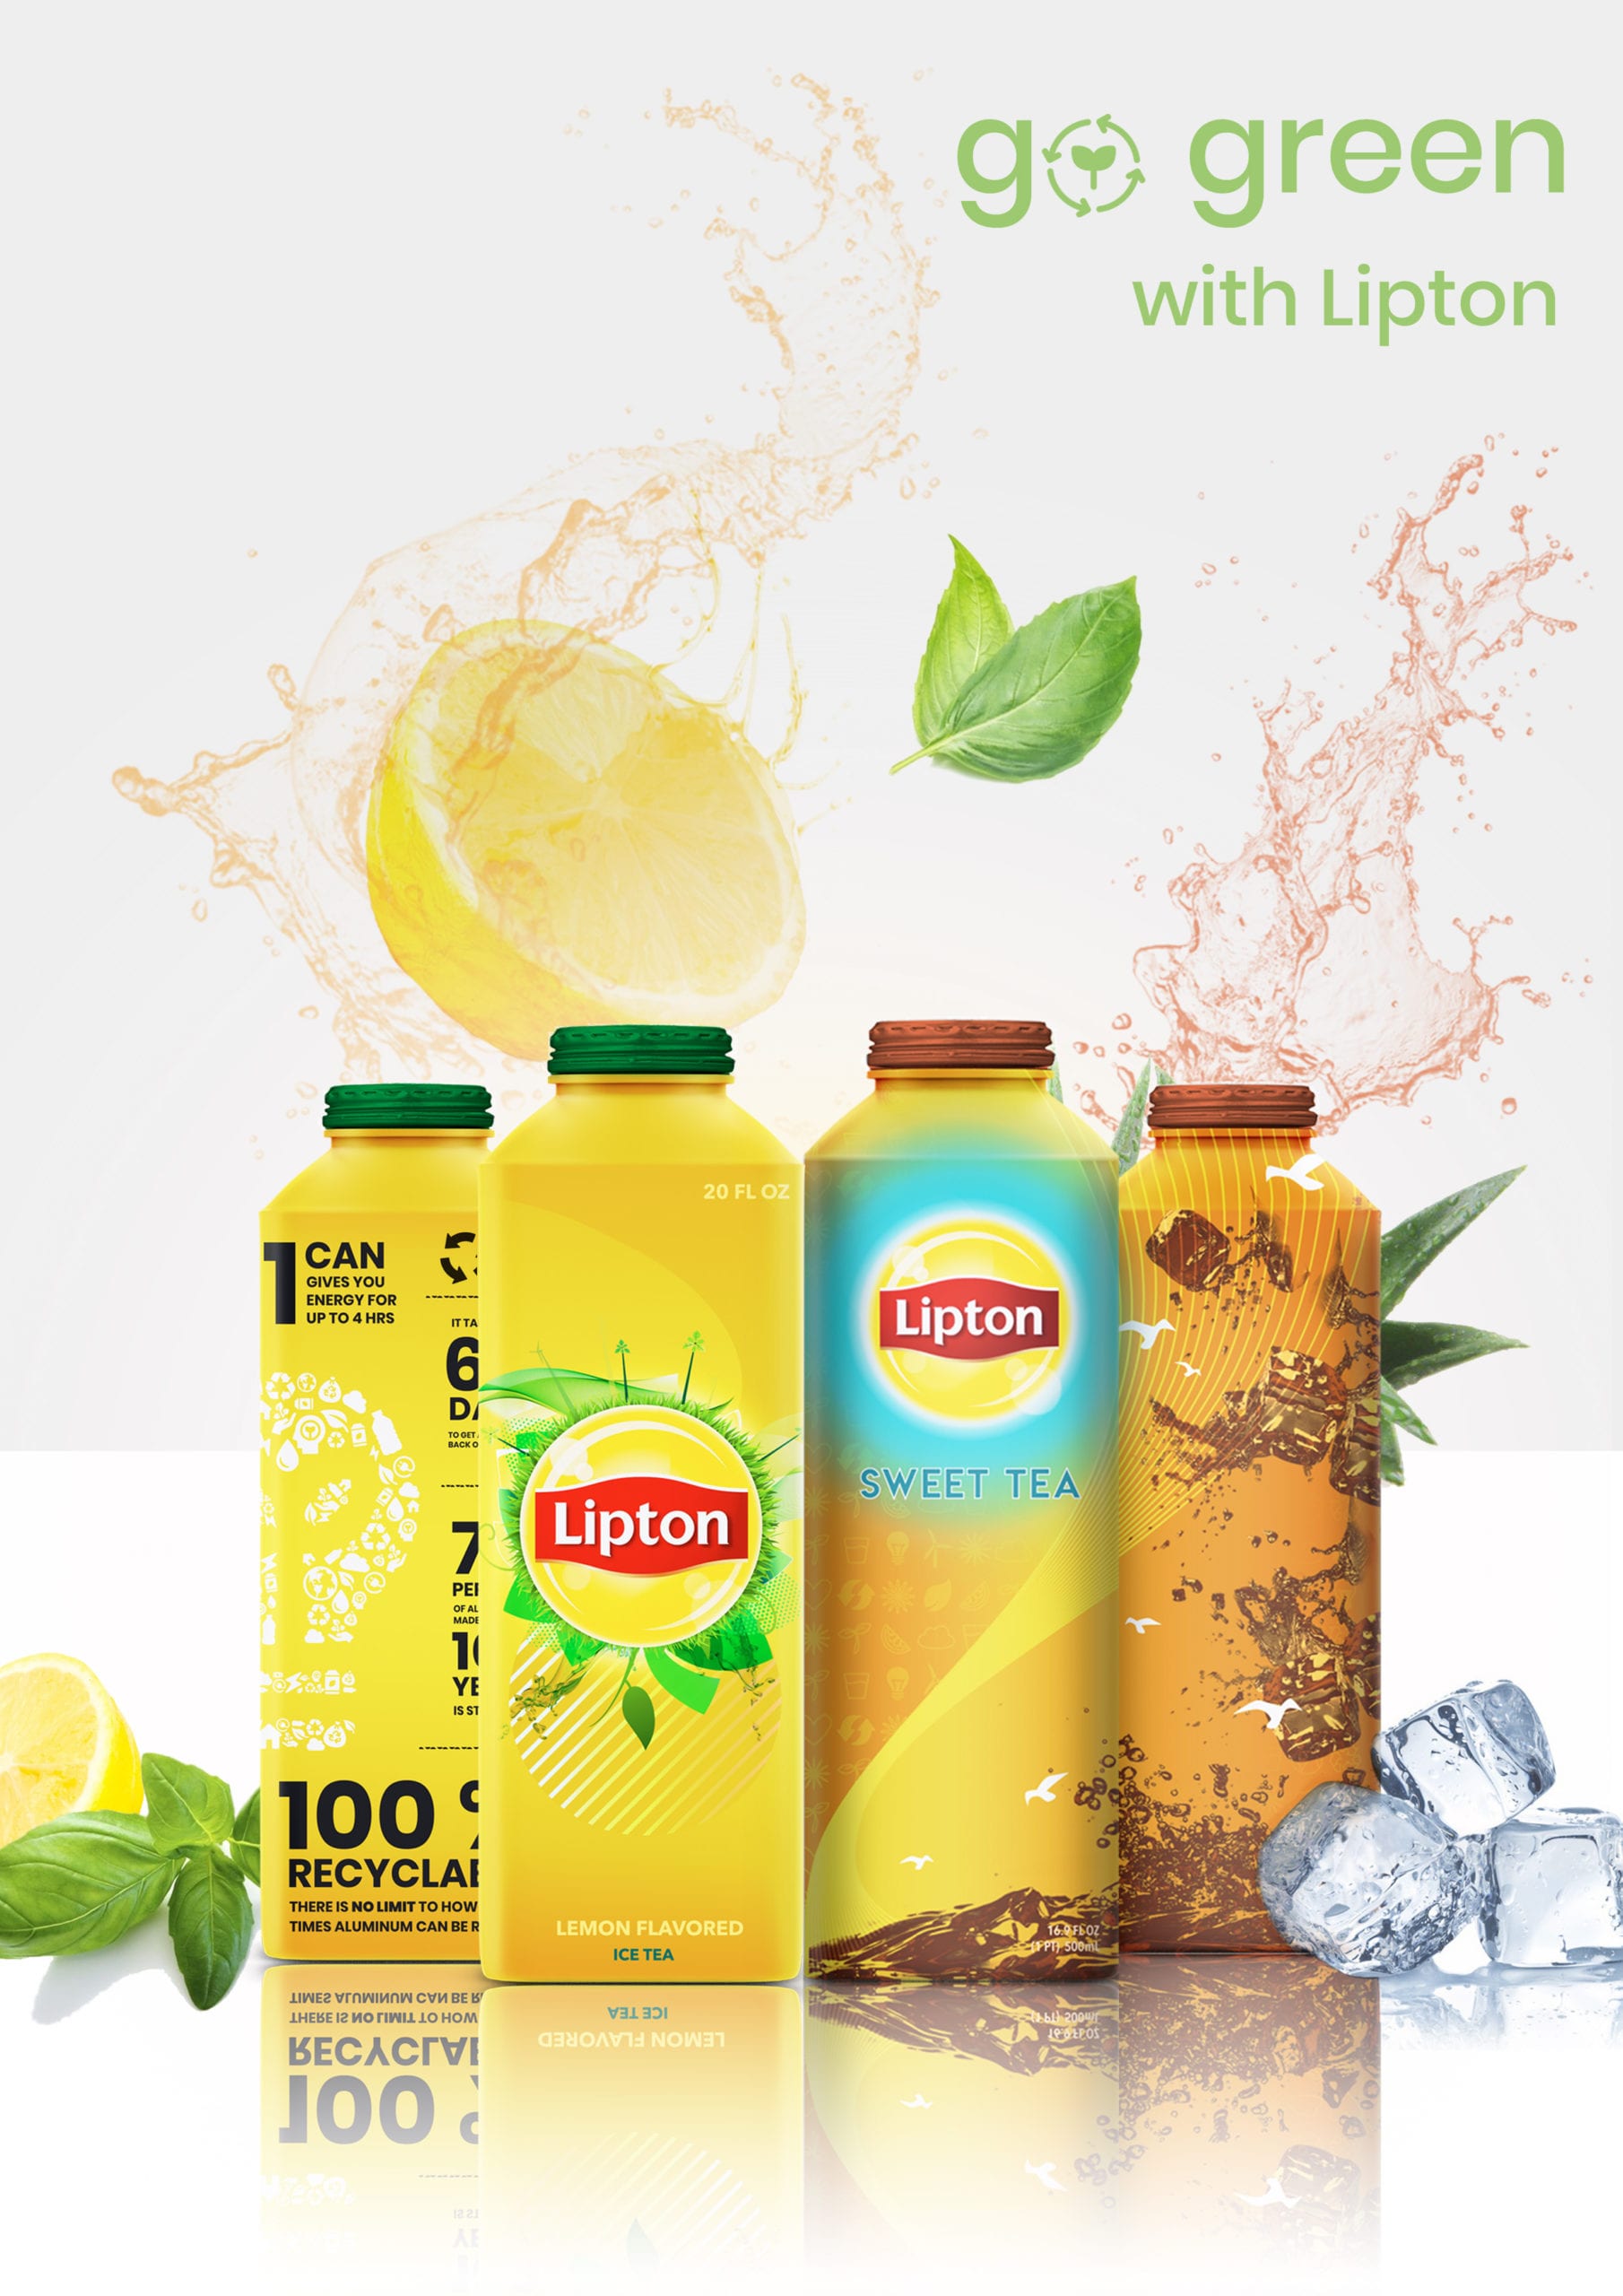 IU C&I Studios Portfolio Lipton Iced Tea product packaging redesign creative marketing challenge